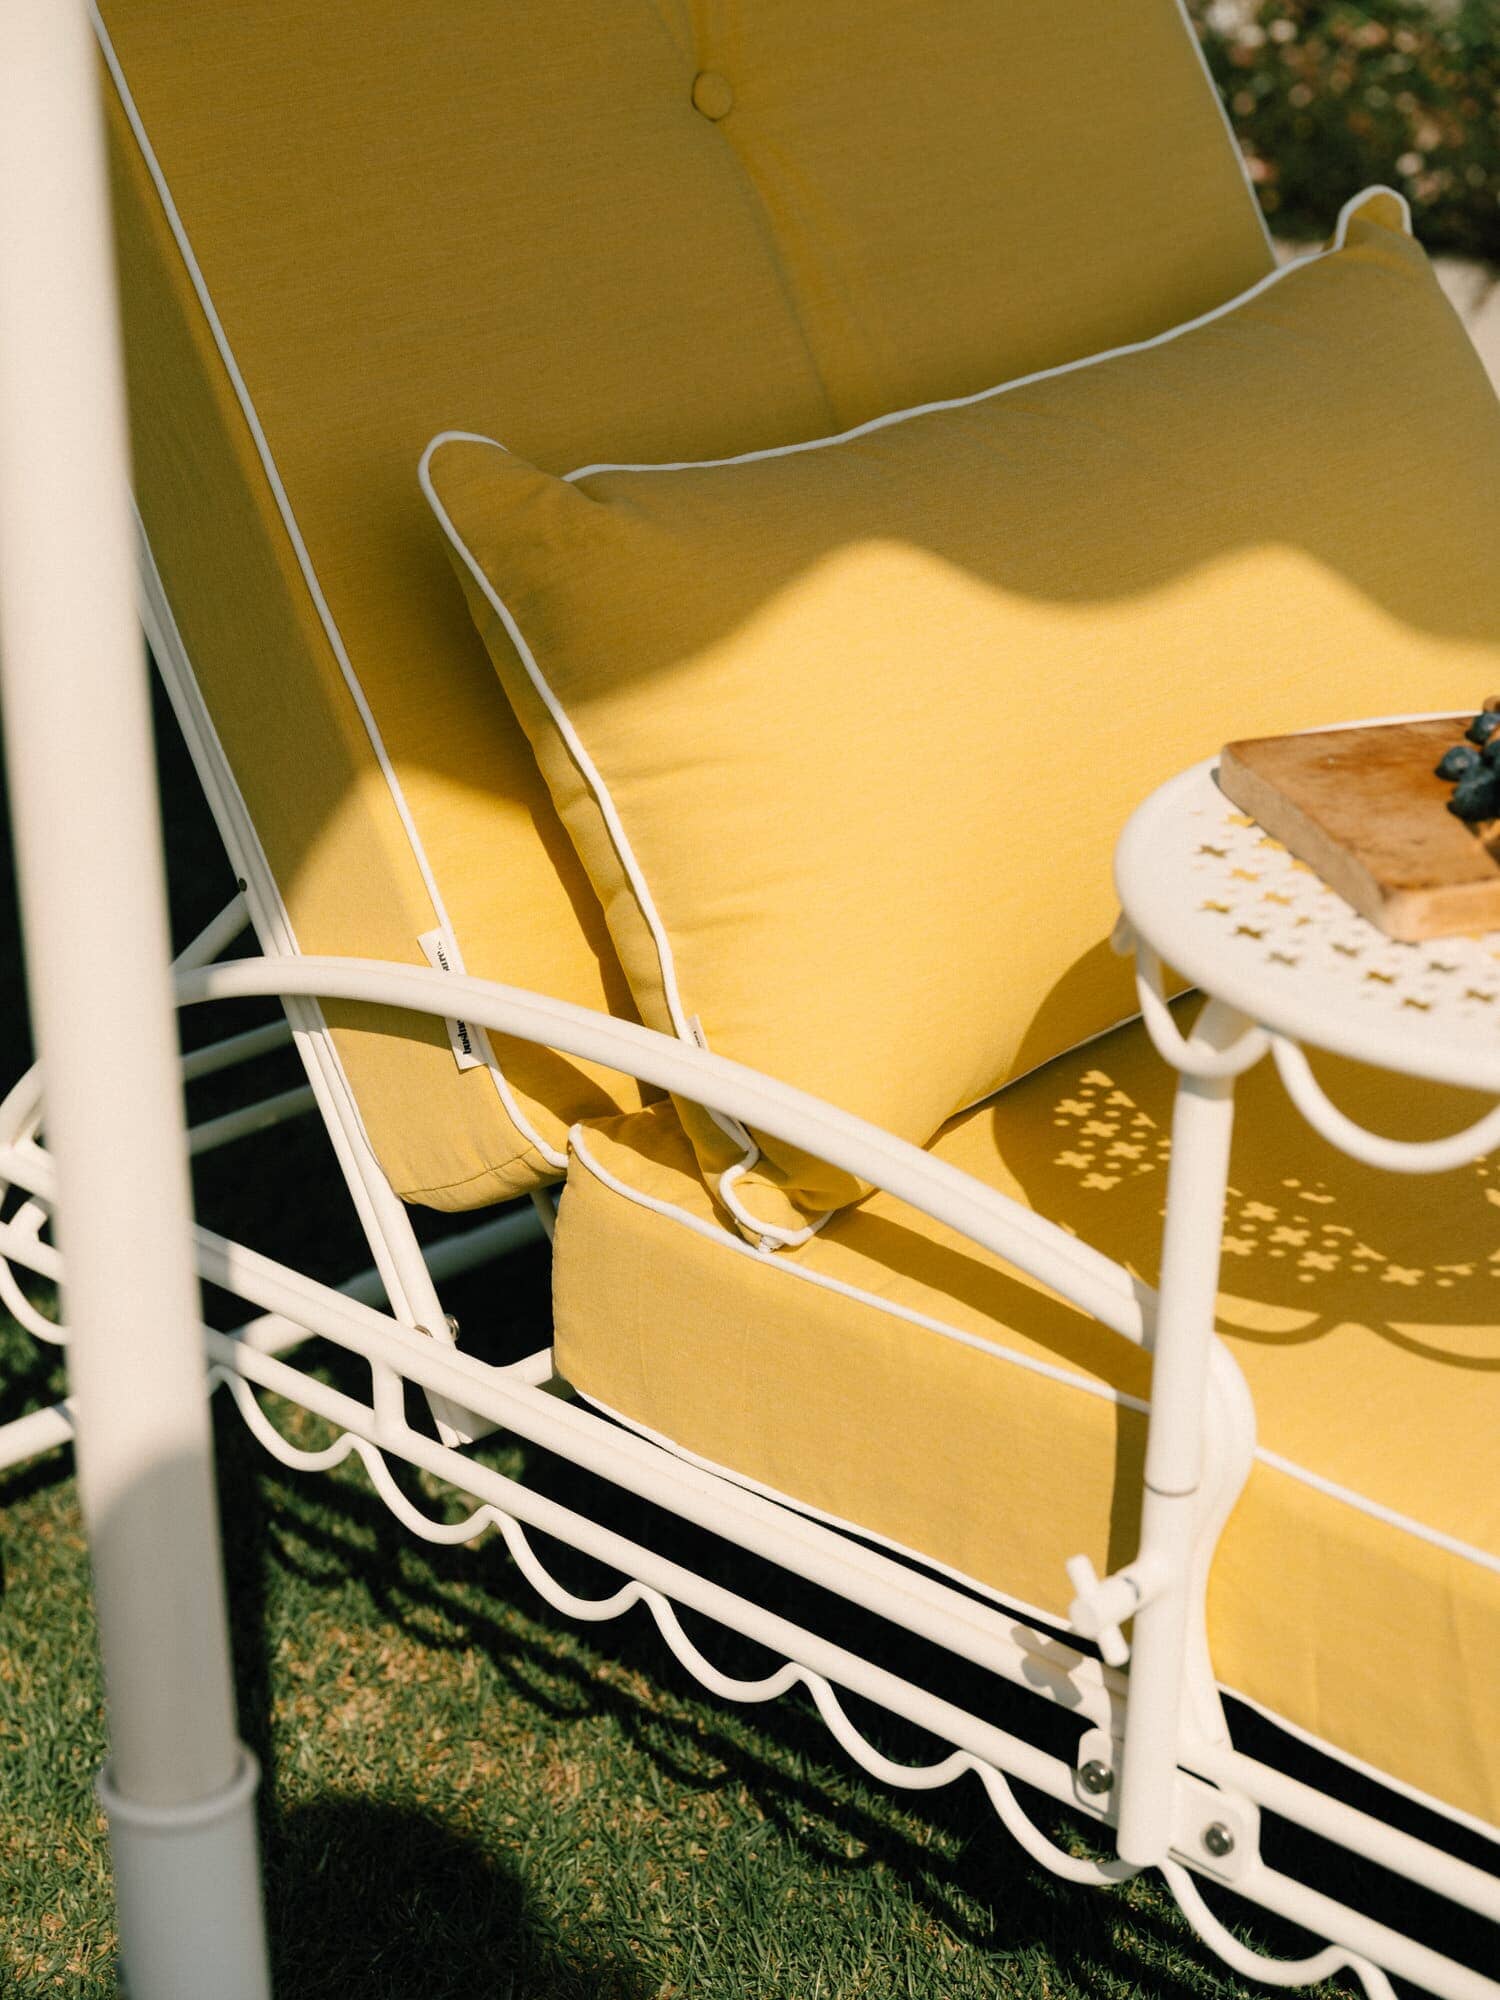 Riviera mimosa throe pillow on a sun lounger in a garden setting